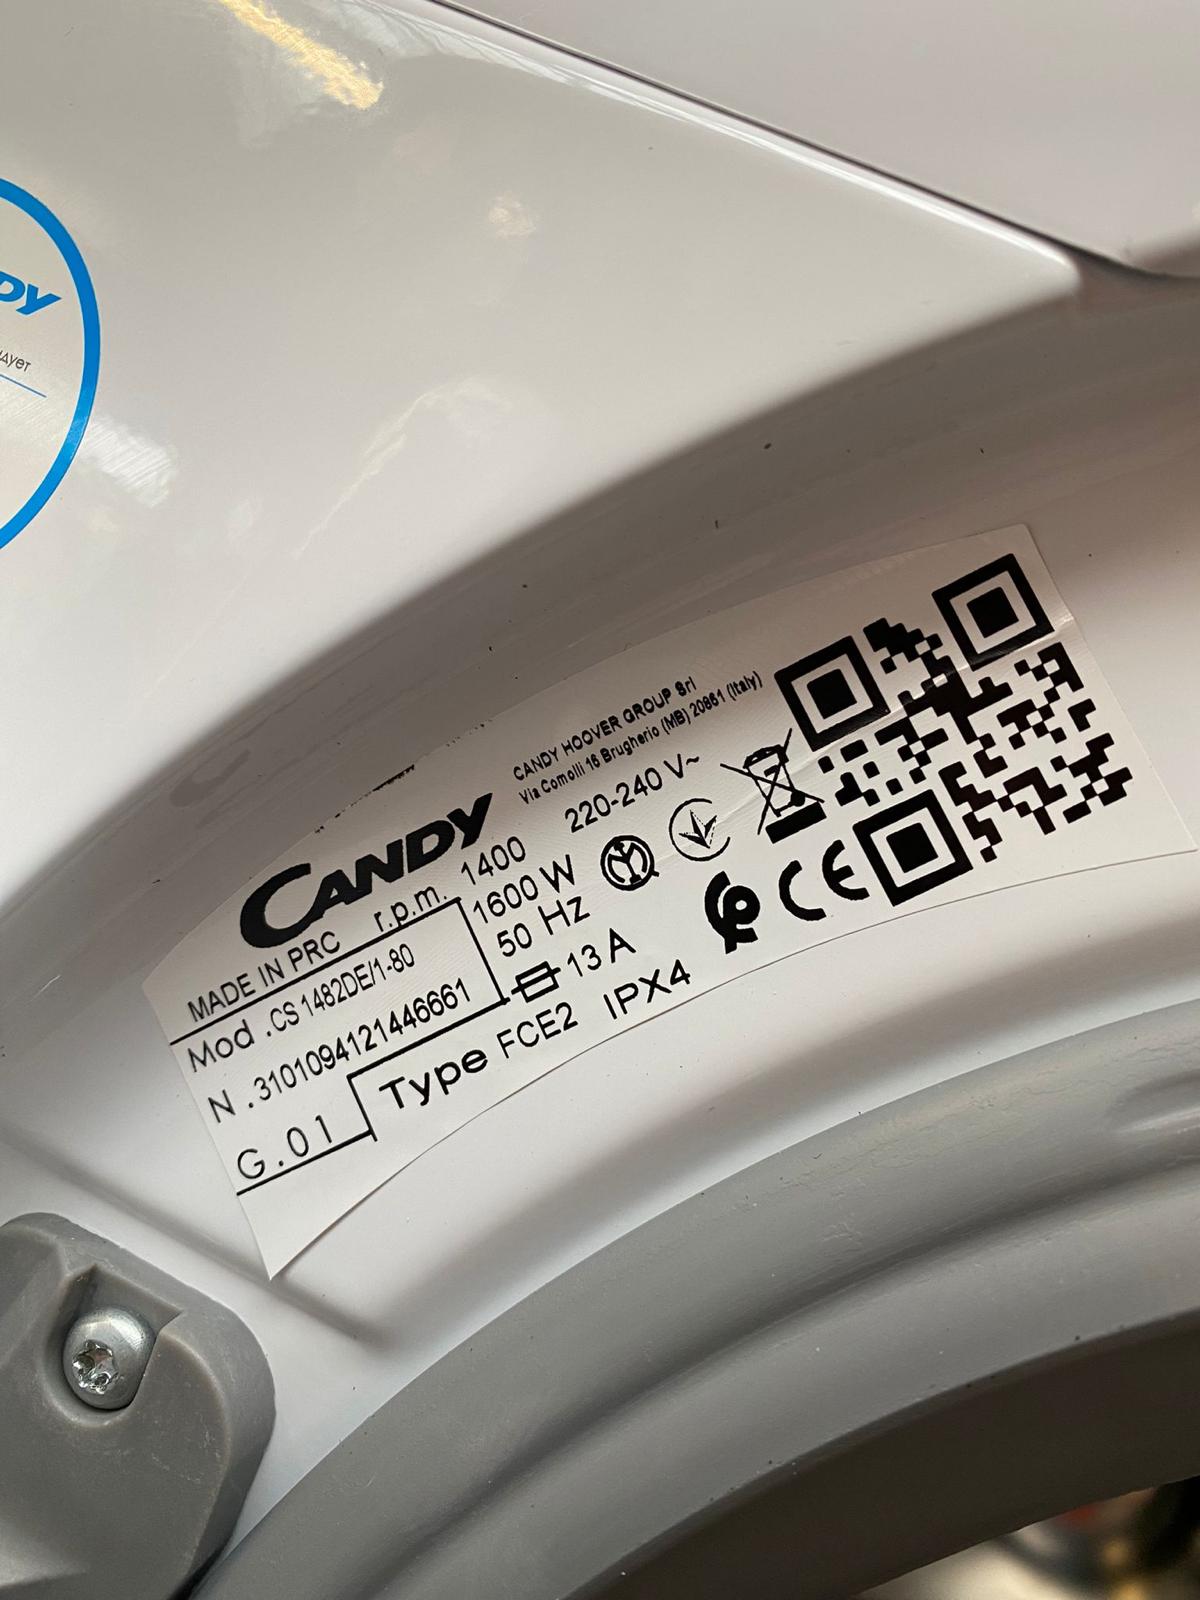 Candy CS 1482DE/1-80 1400rpm Freestanding Washing machine White 8kg Cosmetic Marks 7466